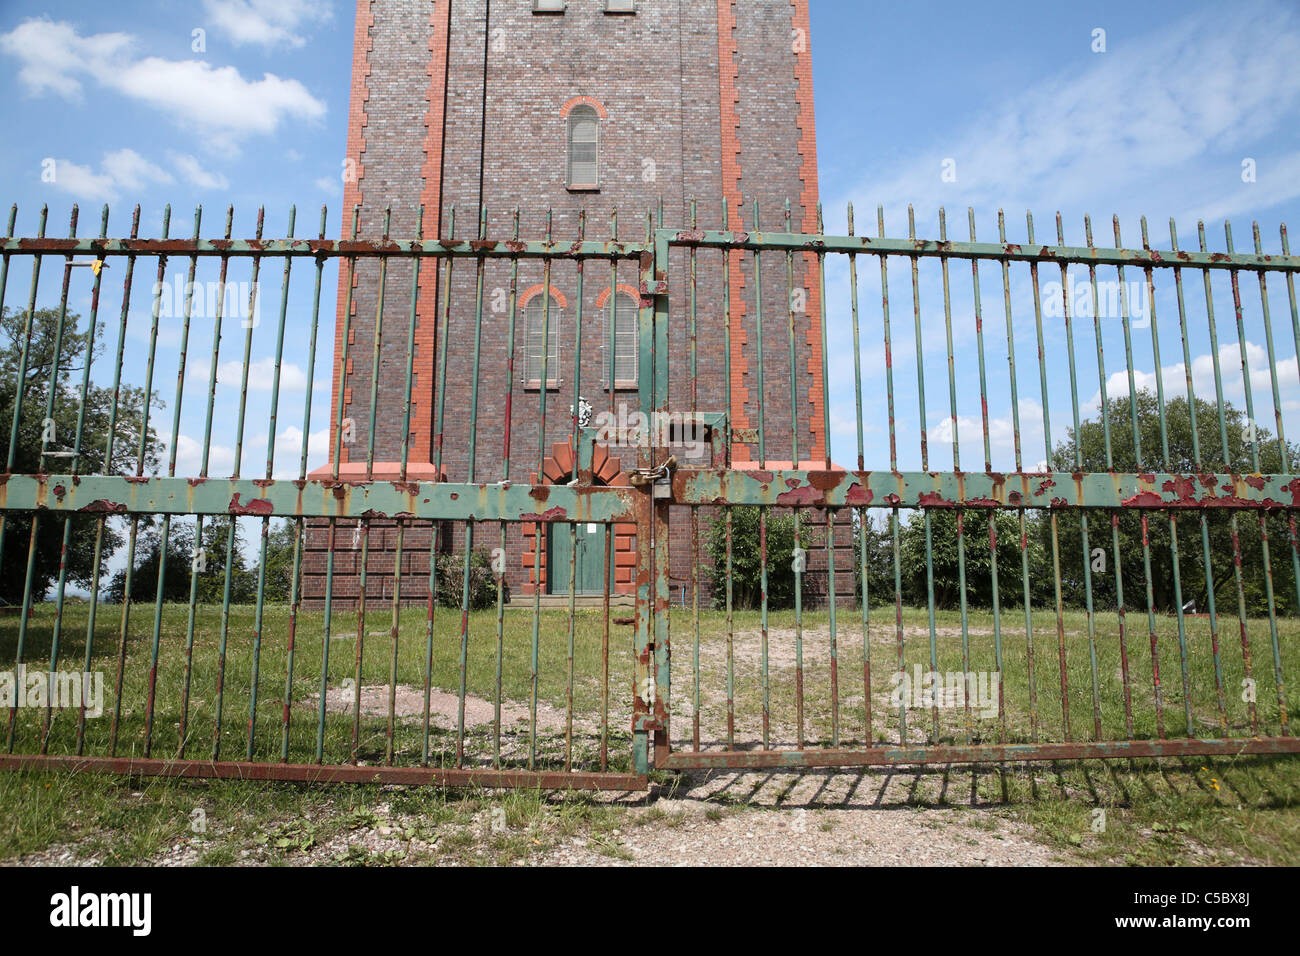 Torre de Agua Winshill Burton a Trent Staffordshire Fotografía de stock -  Alamy